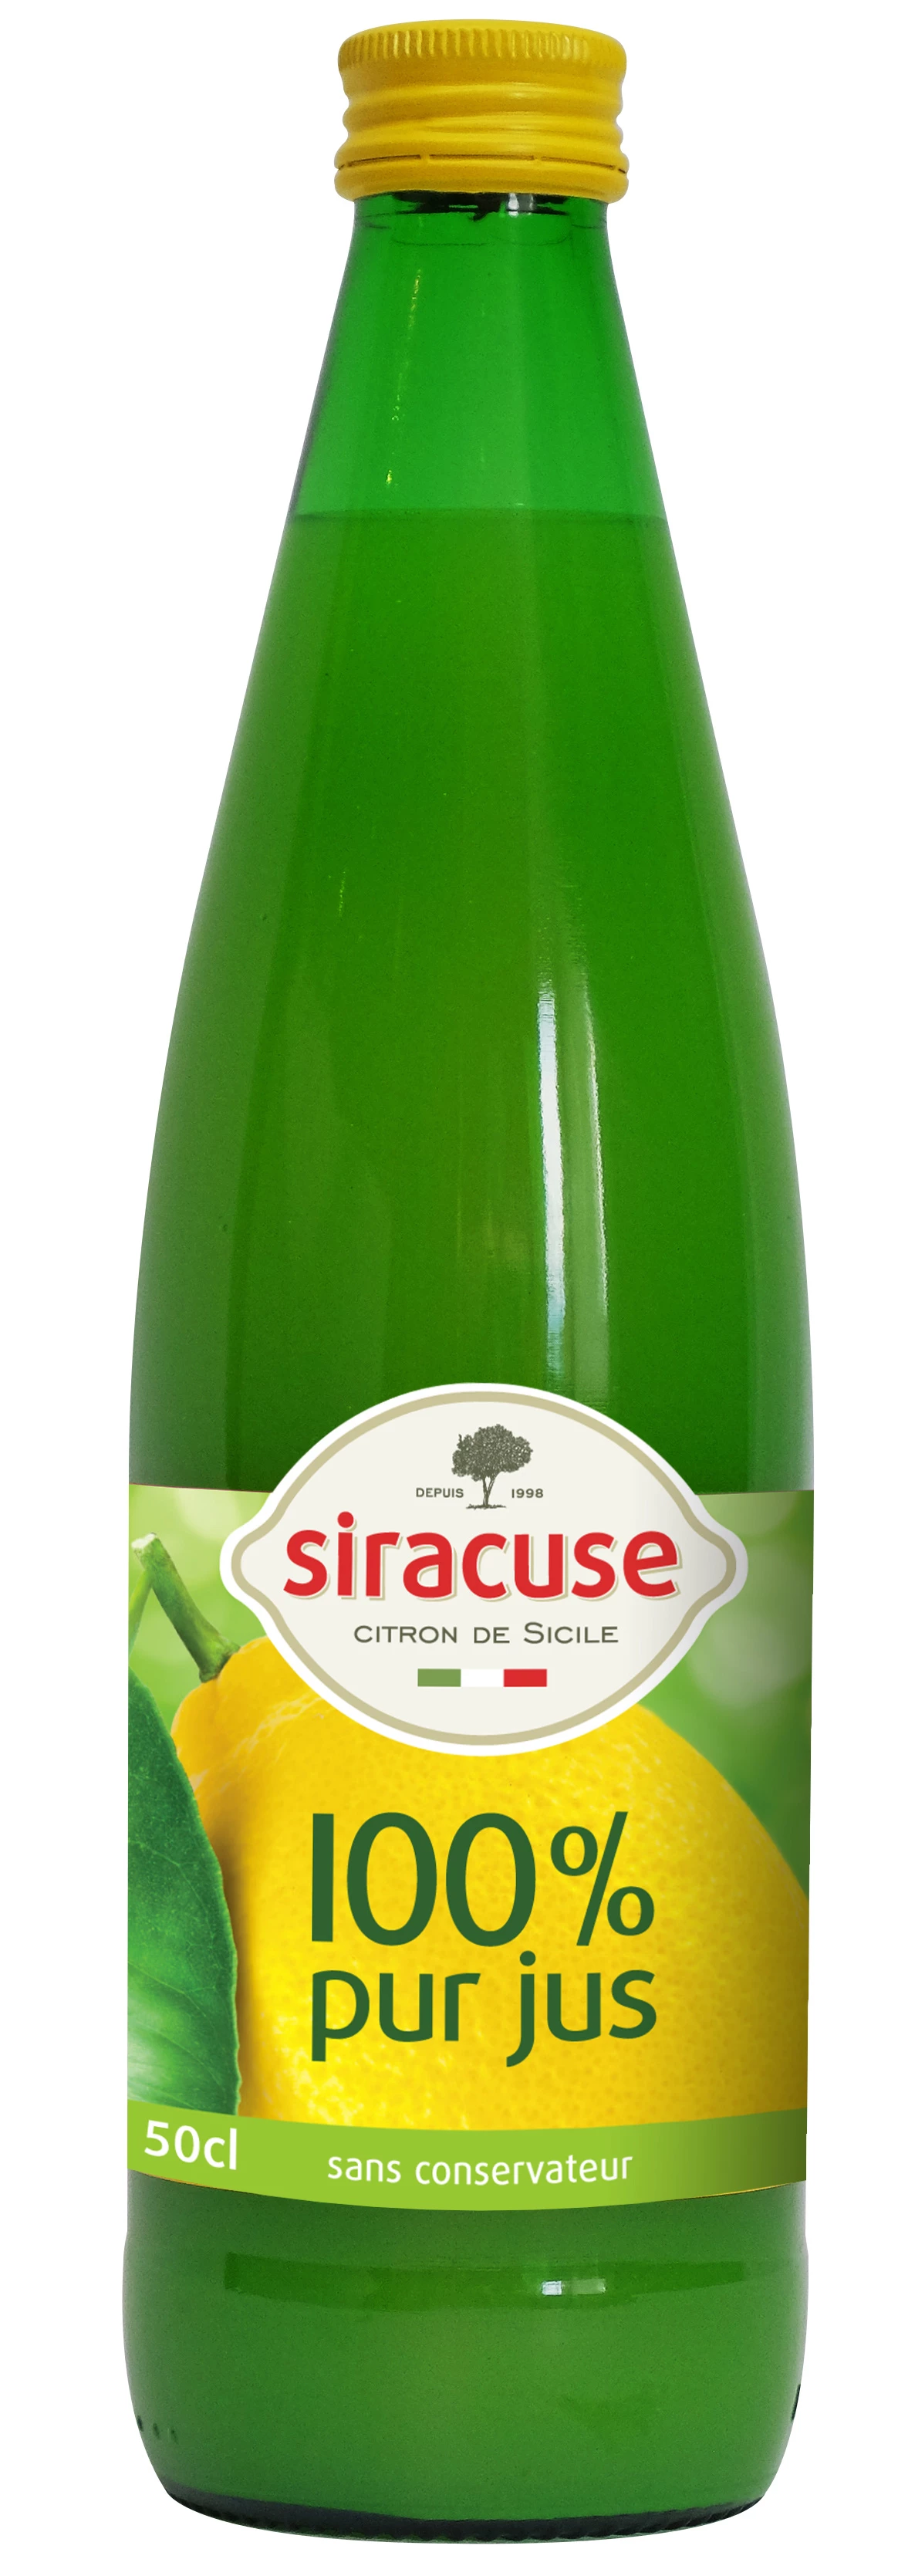 Чистый лимонный сок, 50cl - SIRACUSE